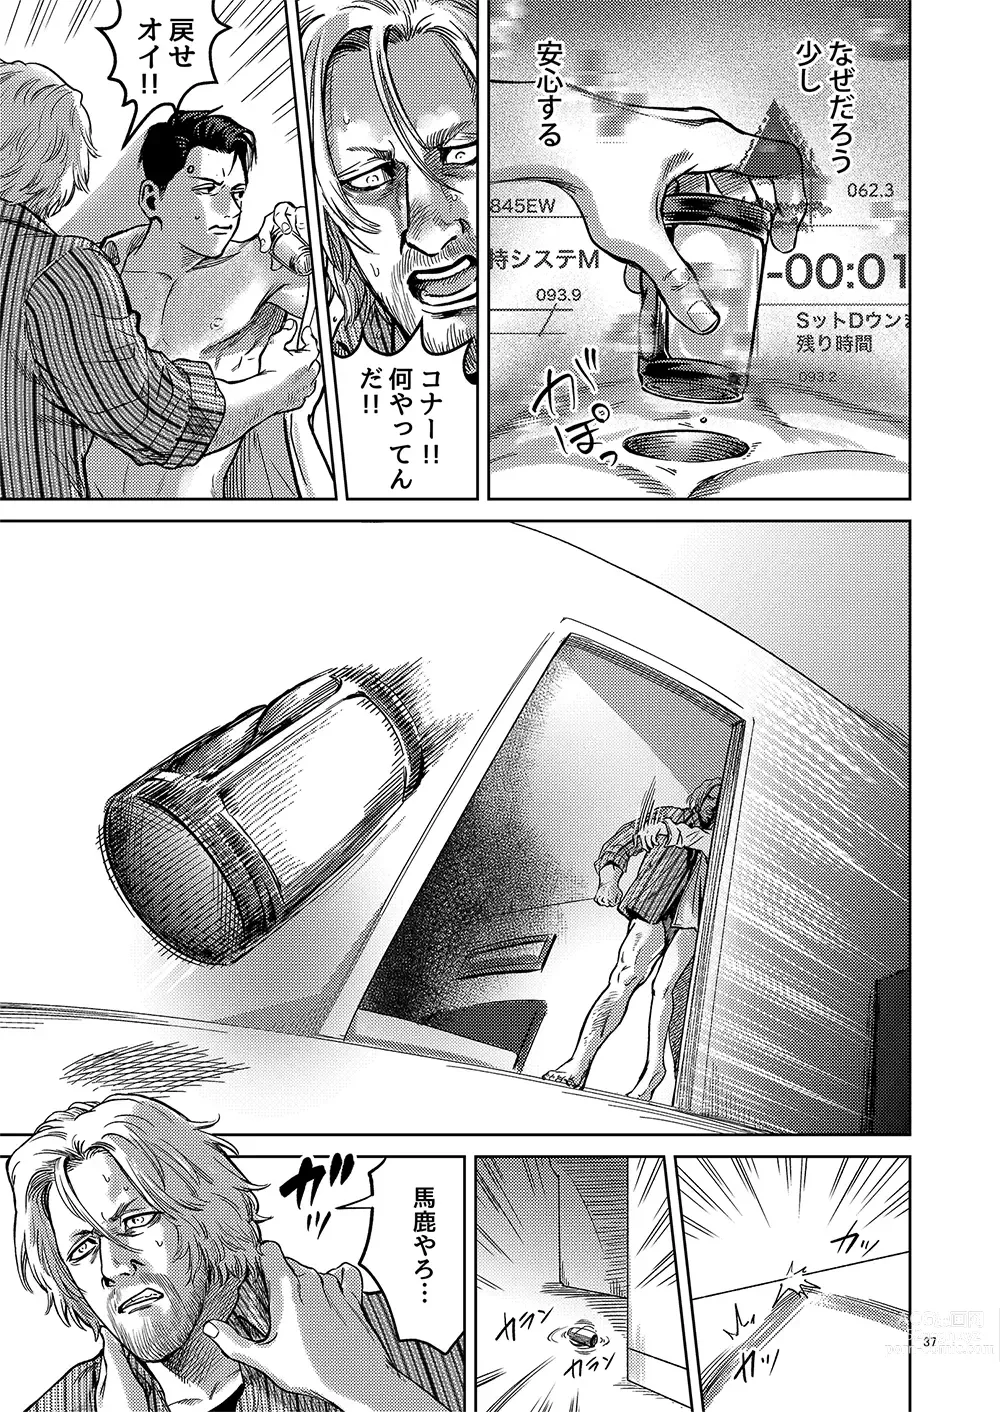 Page 36 of doujinshi Distortion